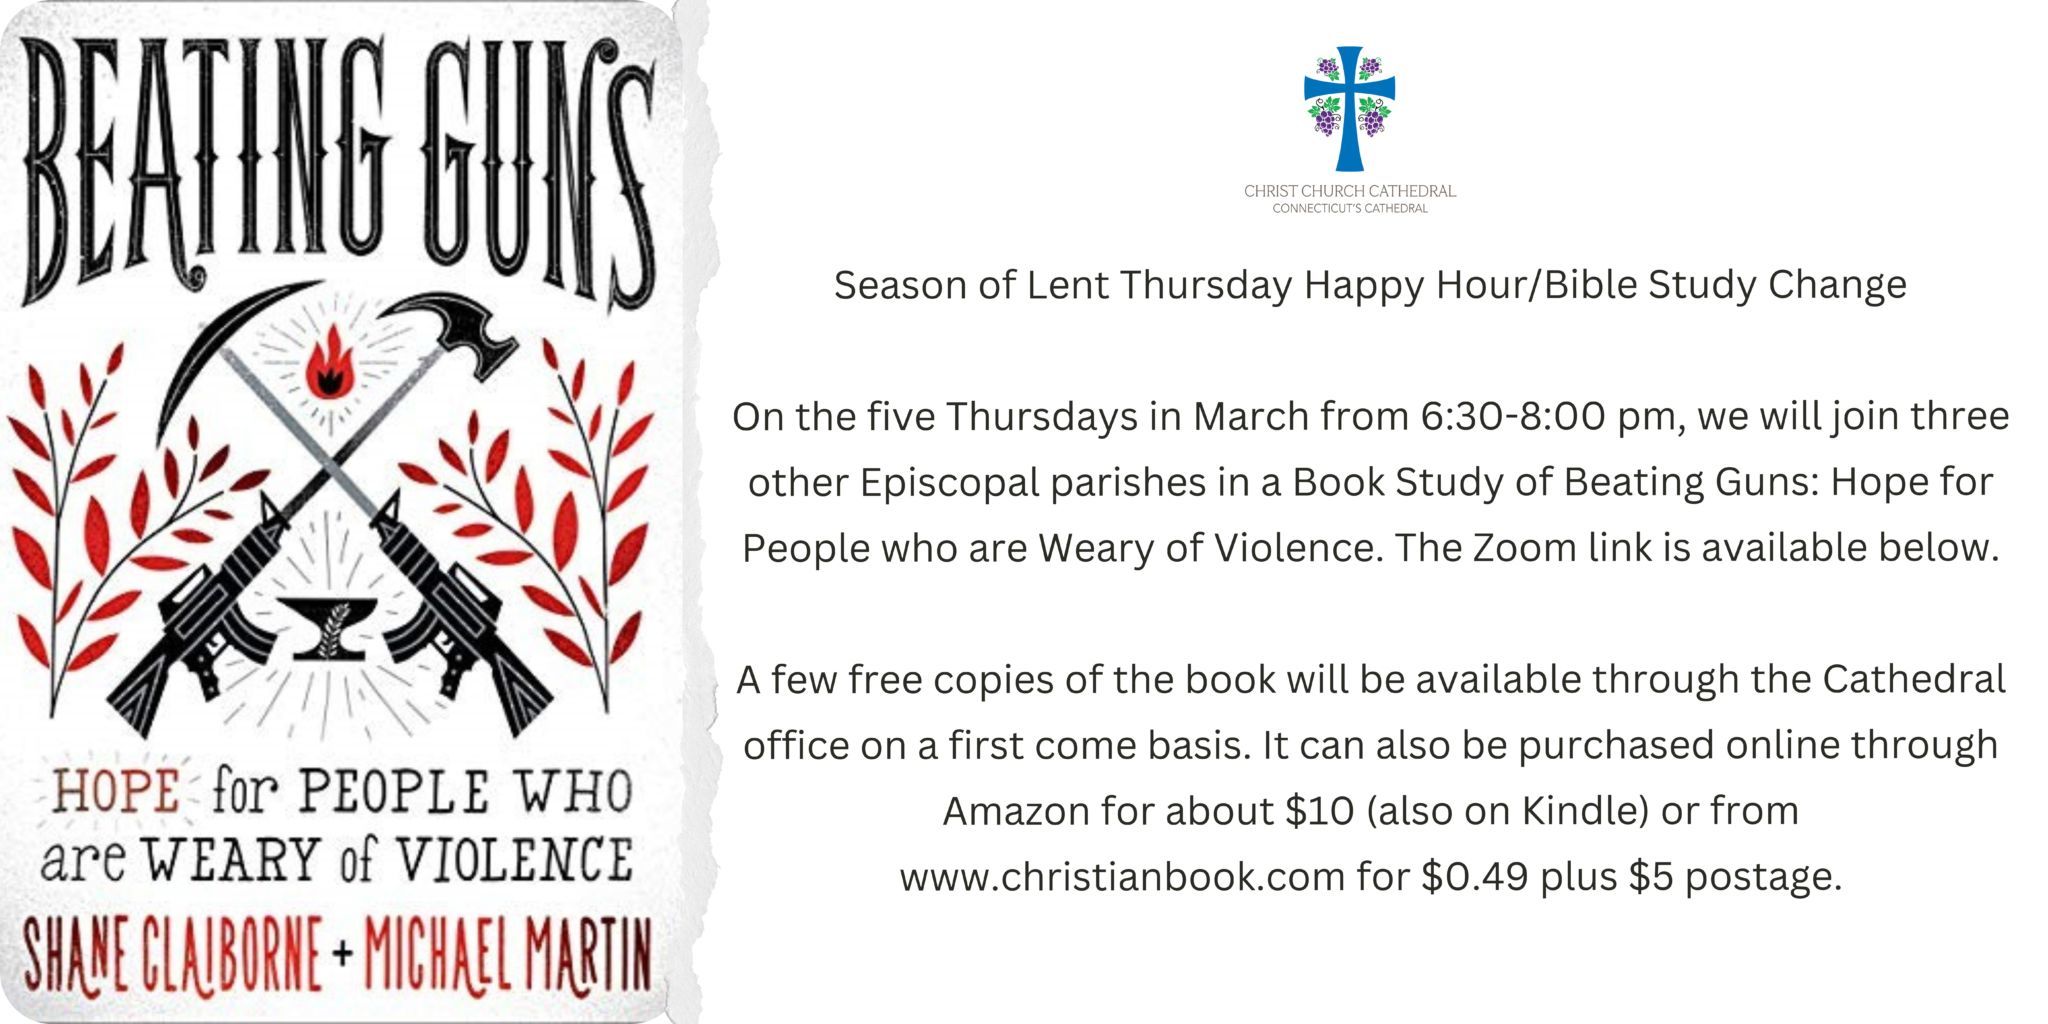 Season of Lent Thursday Happy Hour/Bible Study Change